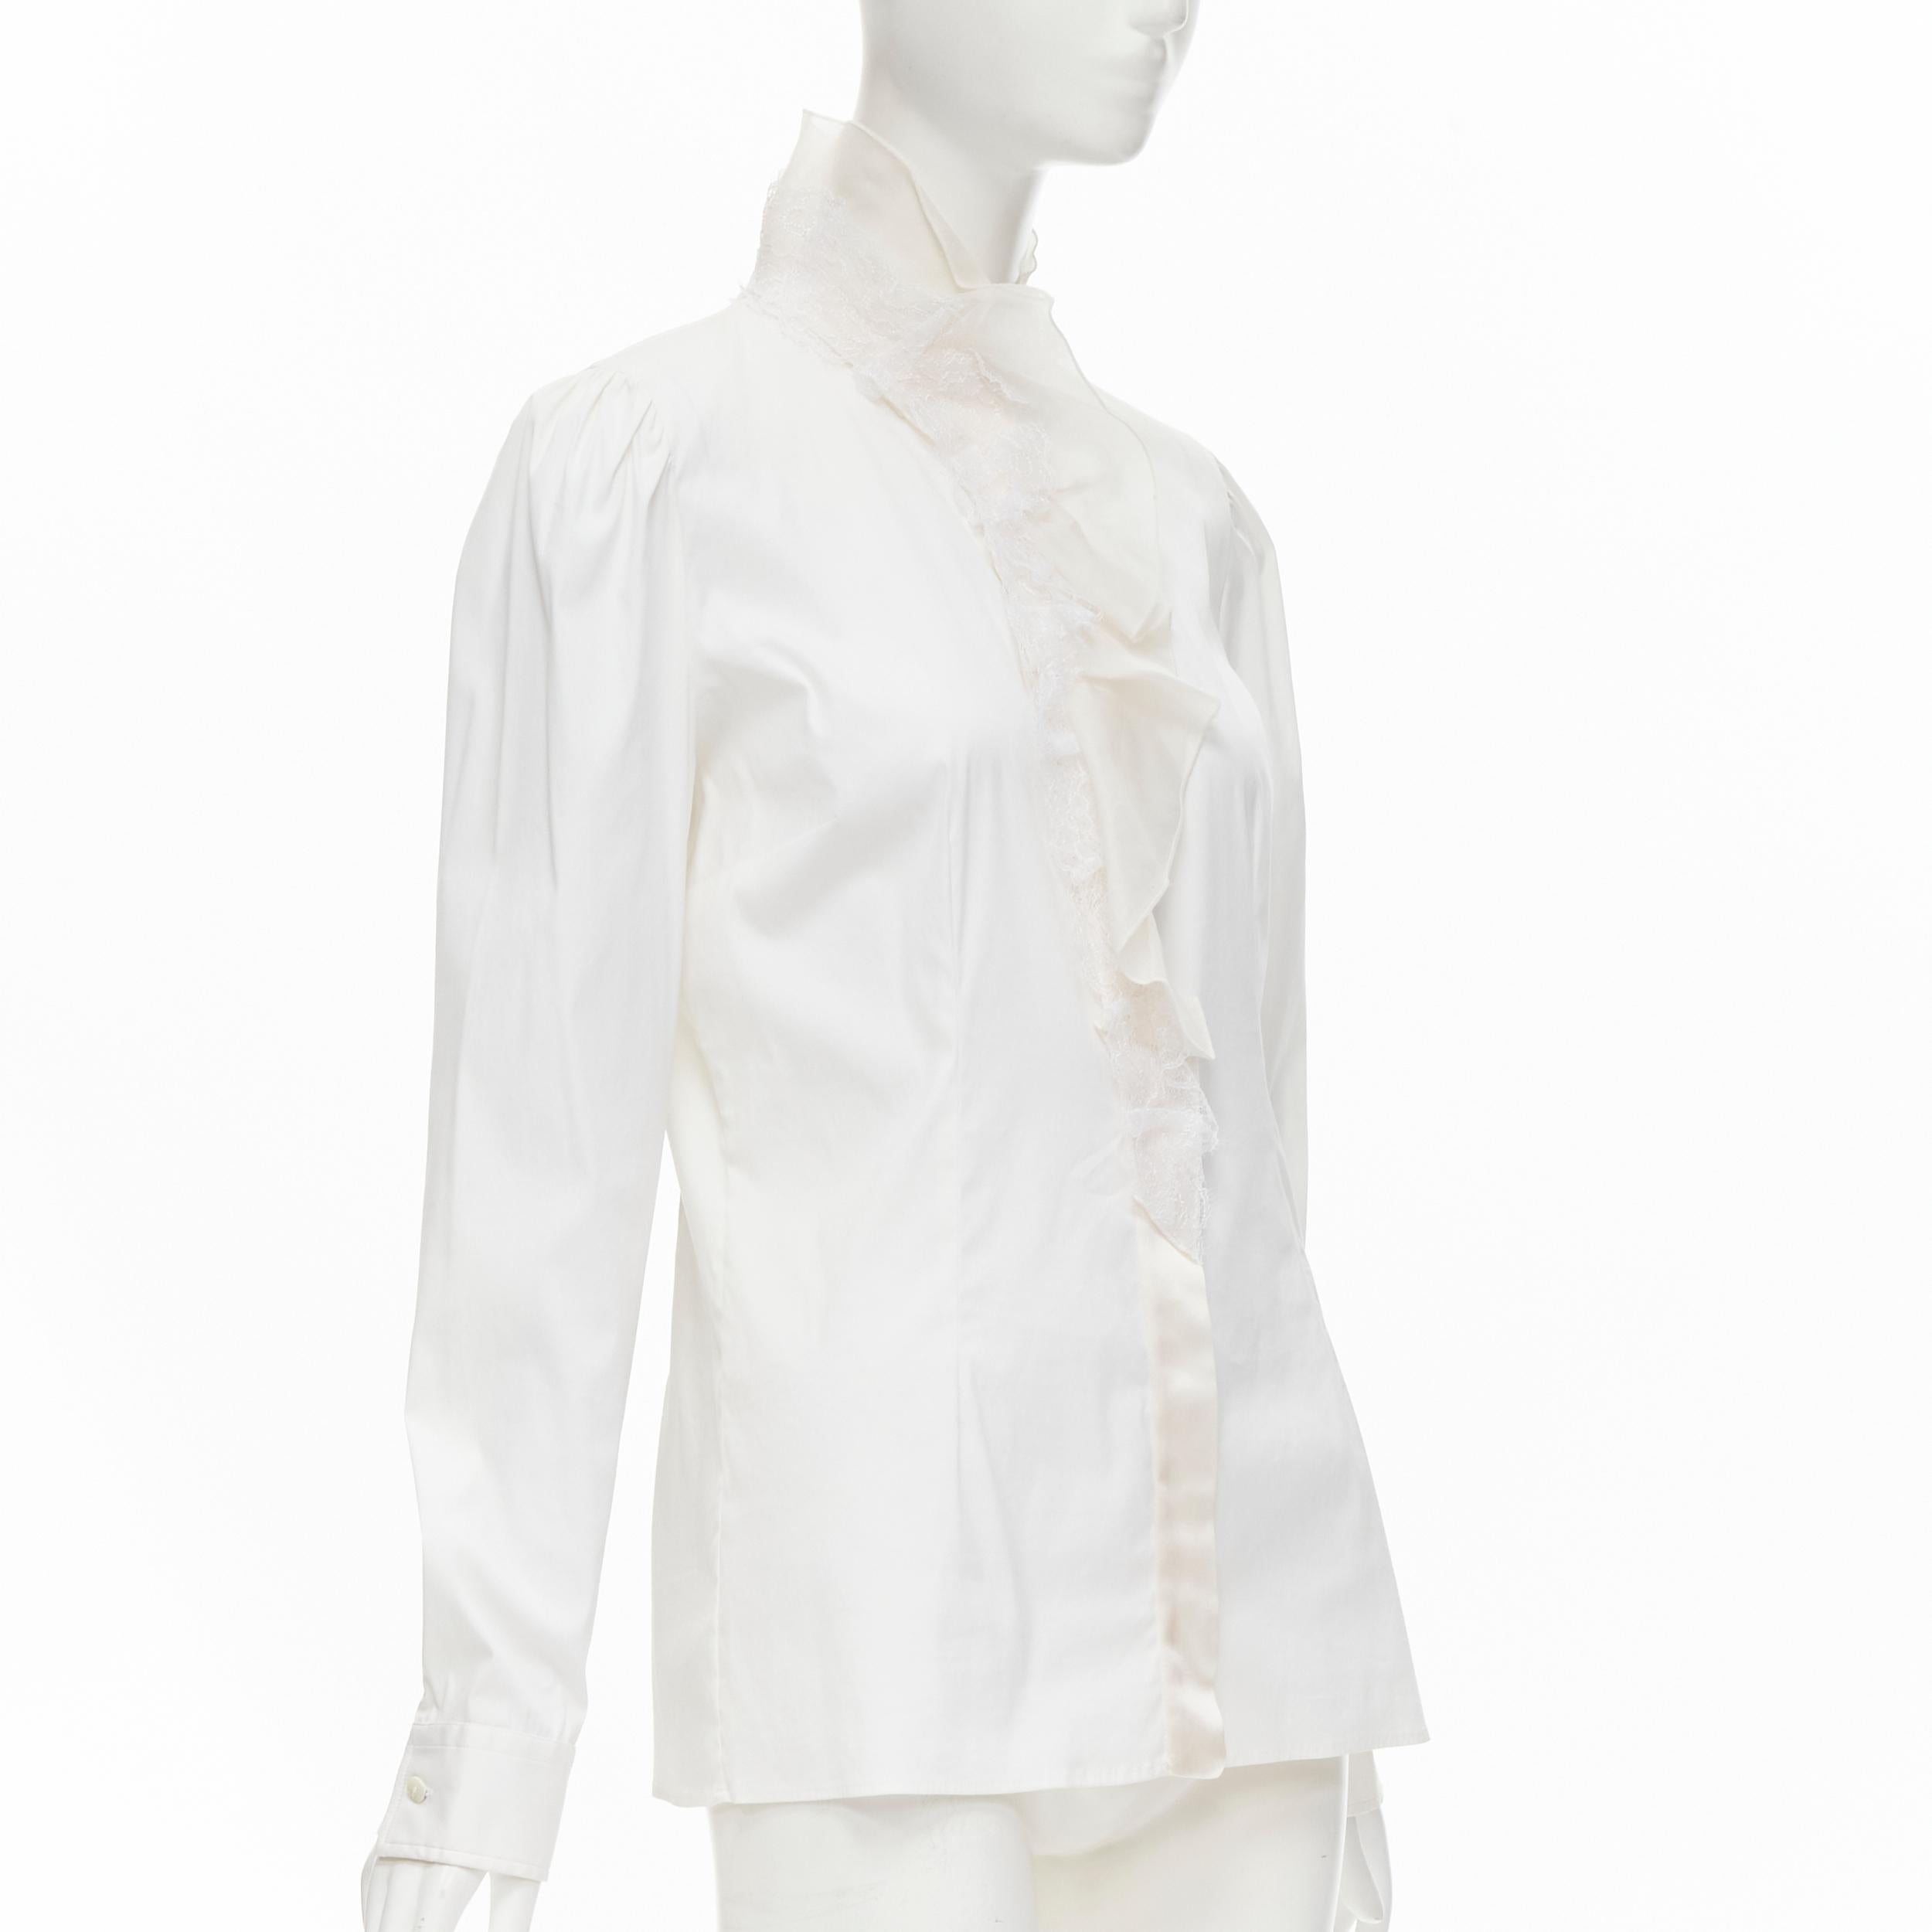 Gray DOLCE GABBANA white cotton lace ruffle collar puff sleeve shirt IT44 M